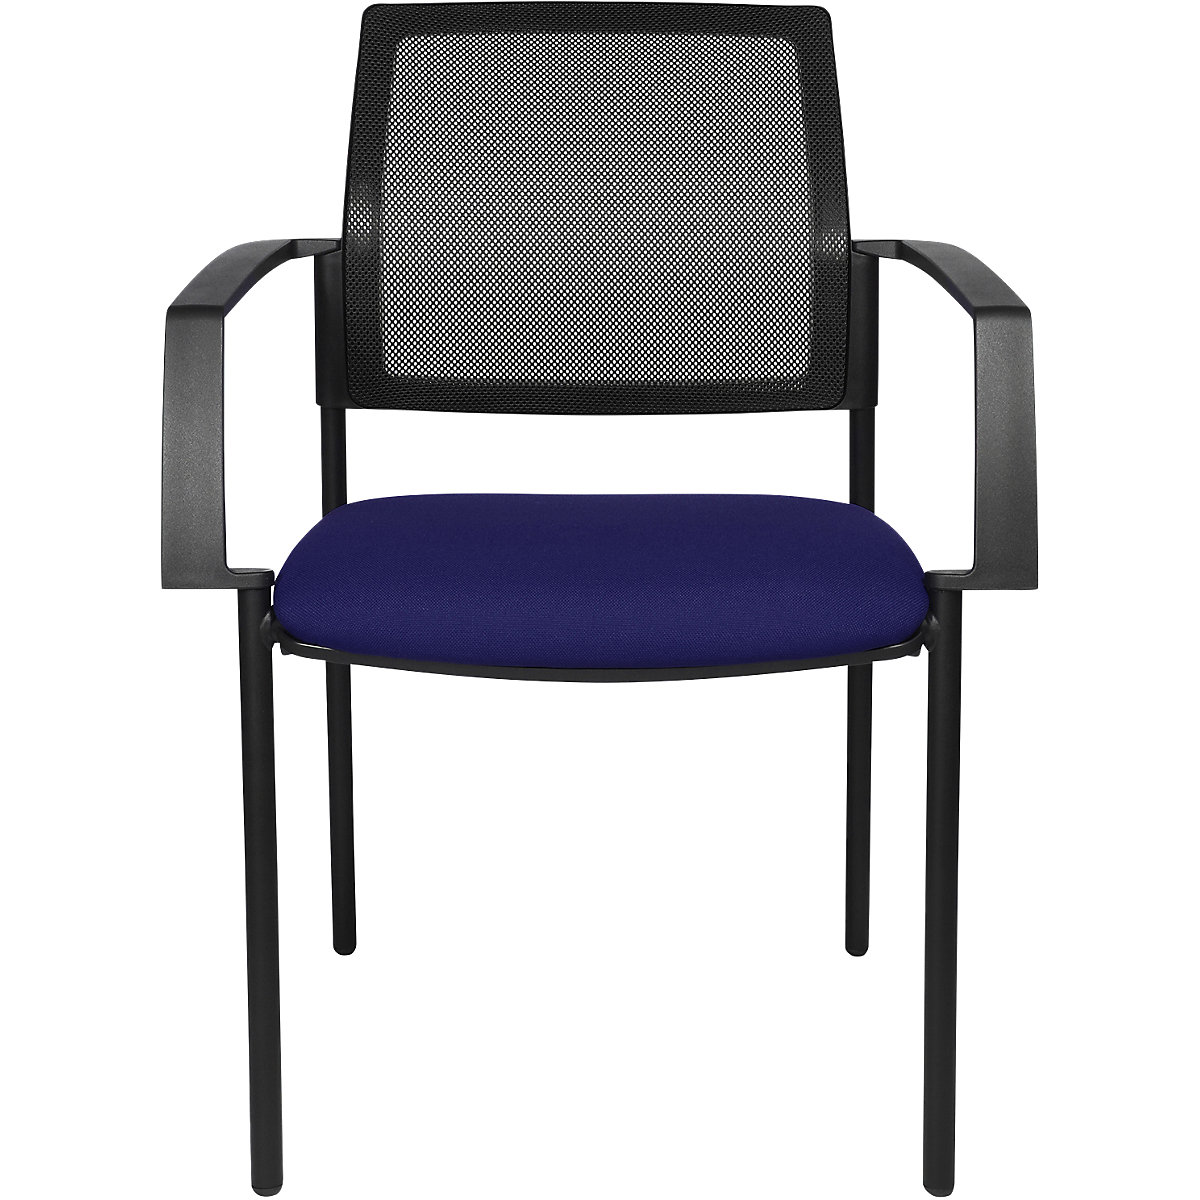 Mesh stacking chair – Topstar, 4-leg, pack of 2, blue seat, black frame-7